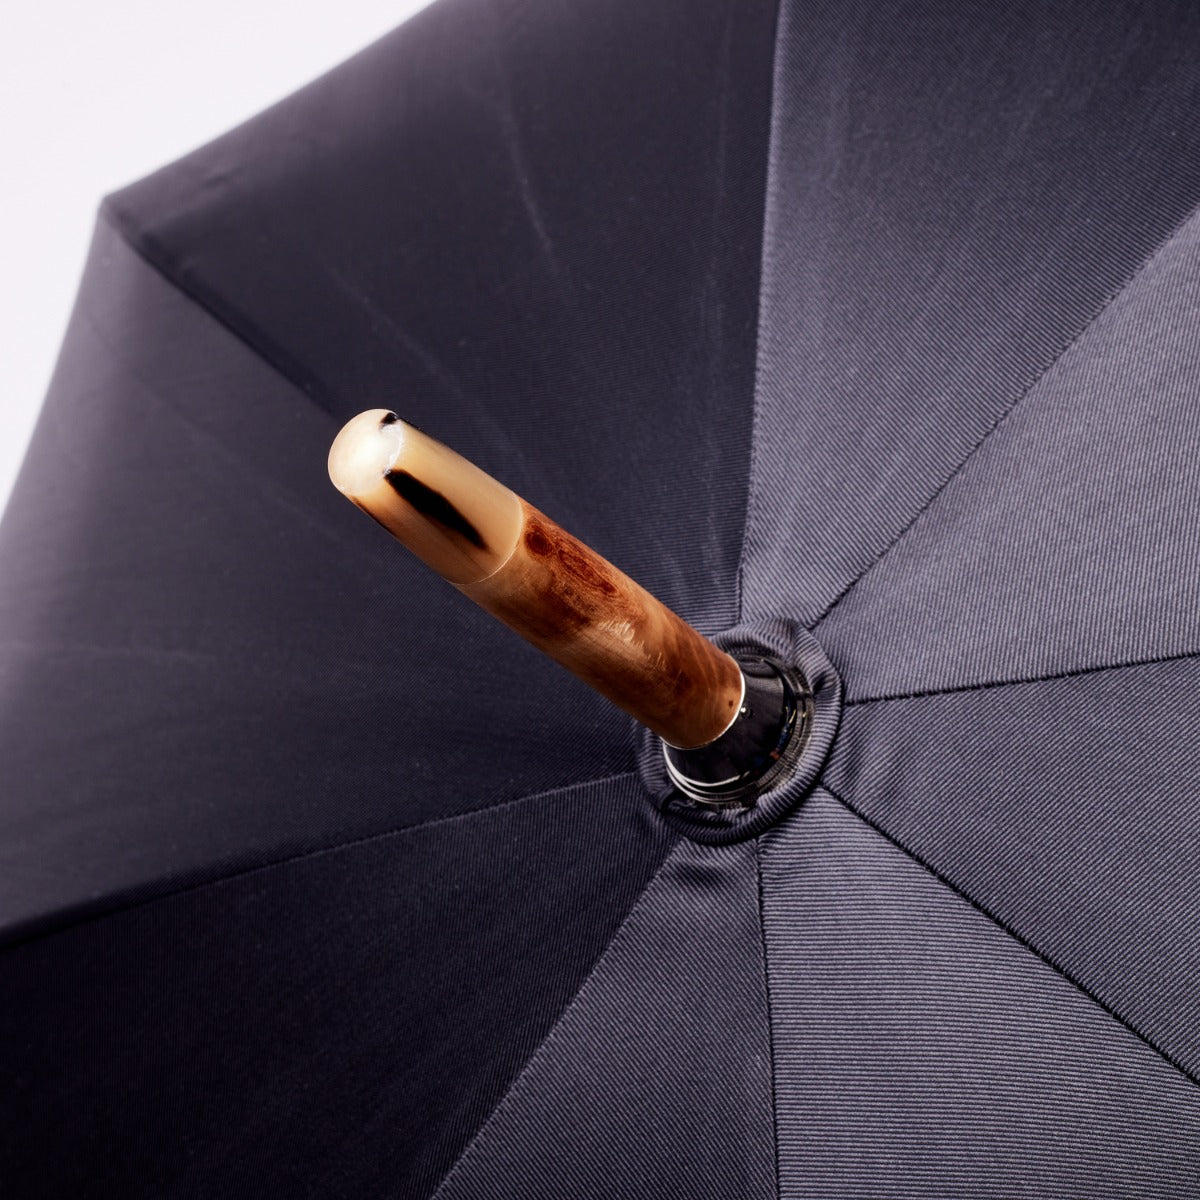 A Elm Wood Umbrella with Black Canopy by KirbyAllison.com.